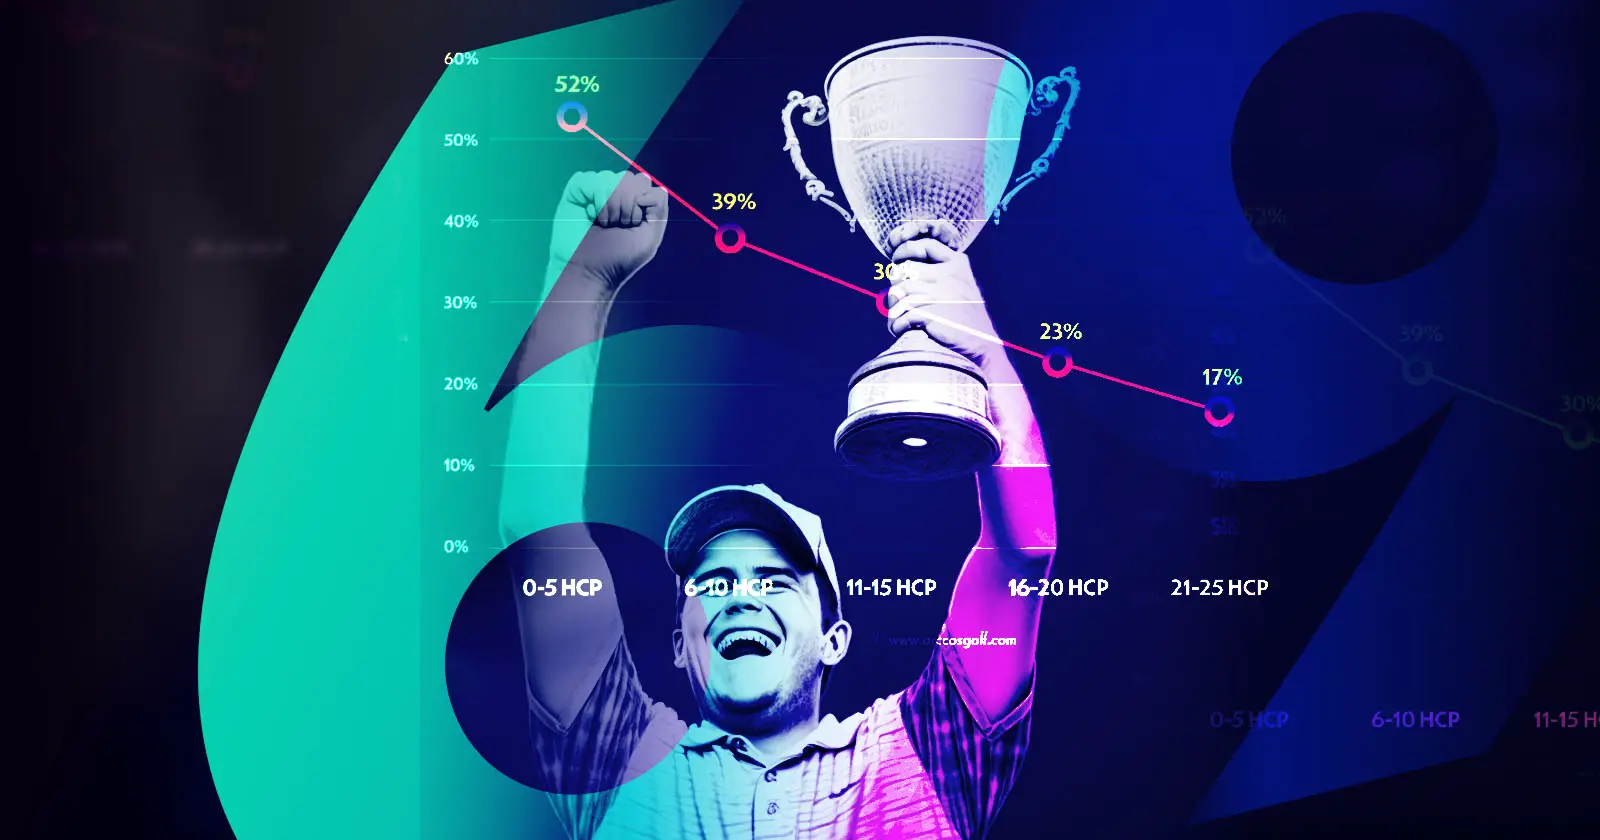 What Percent of Golfers Break 70